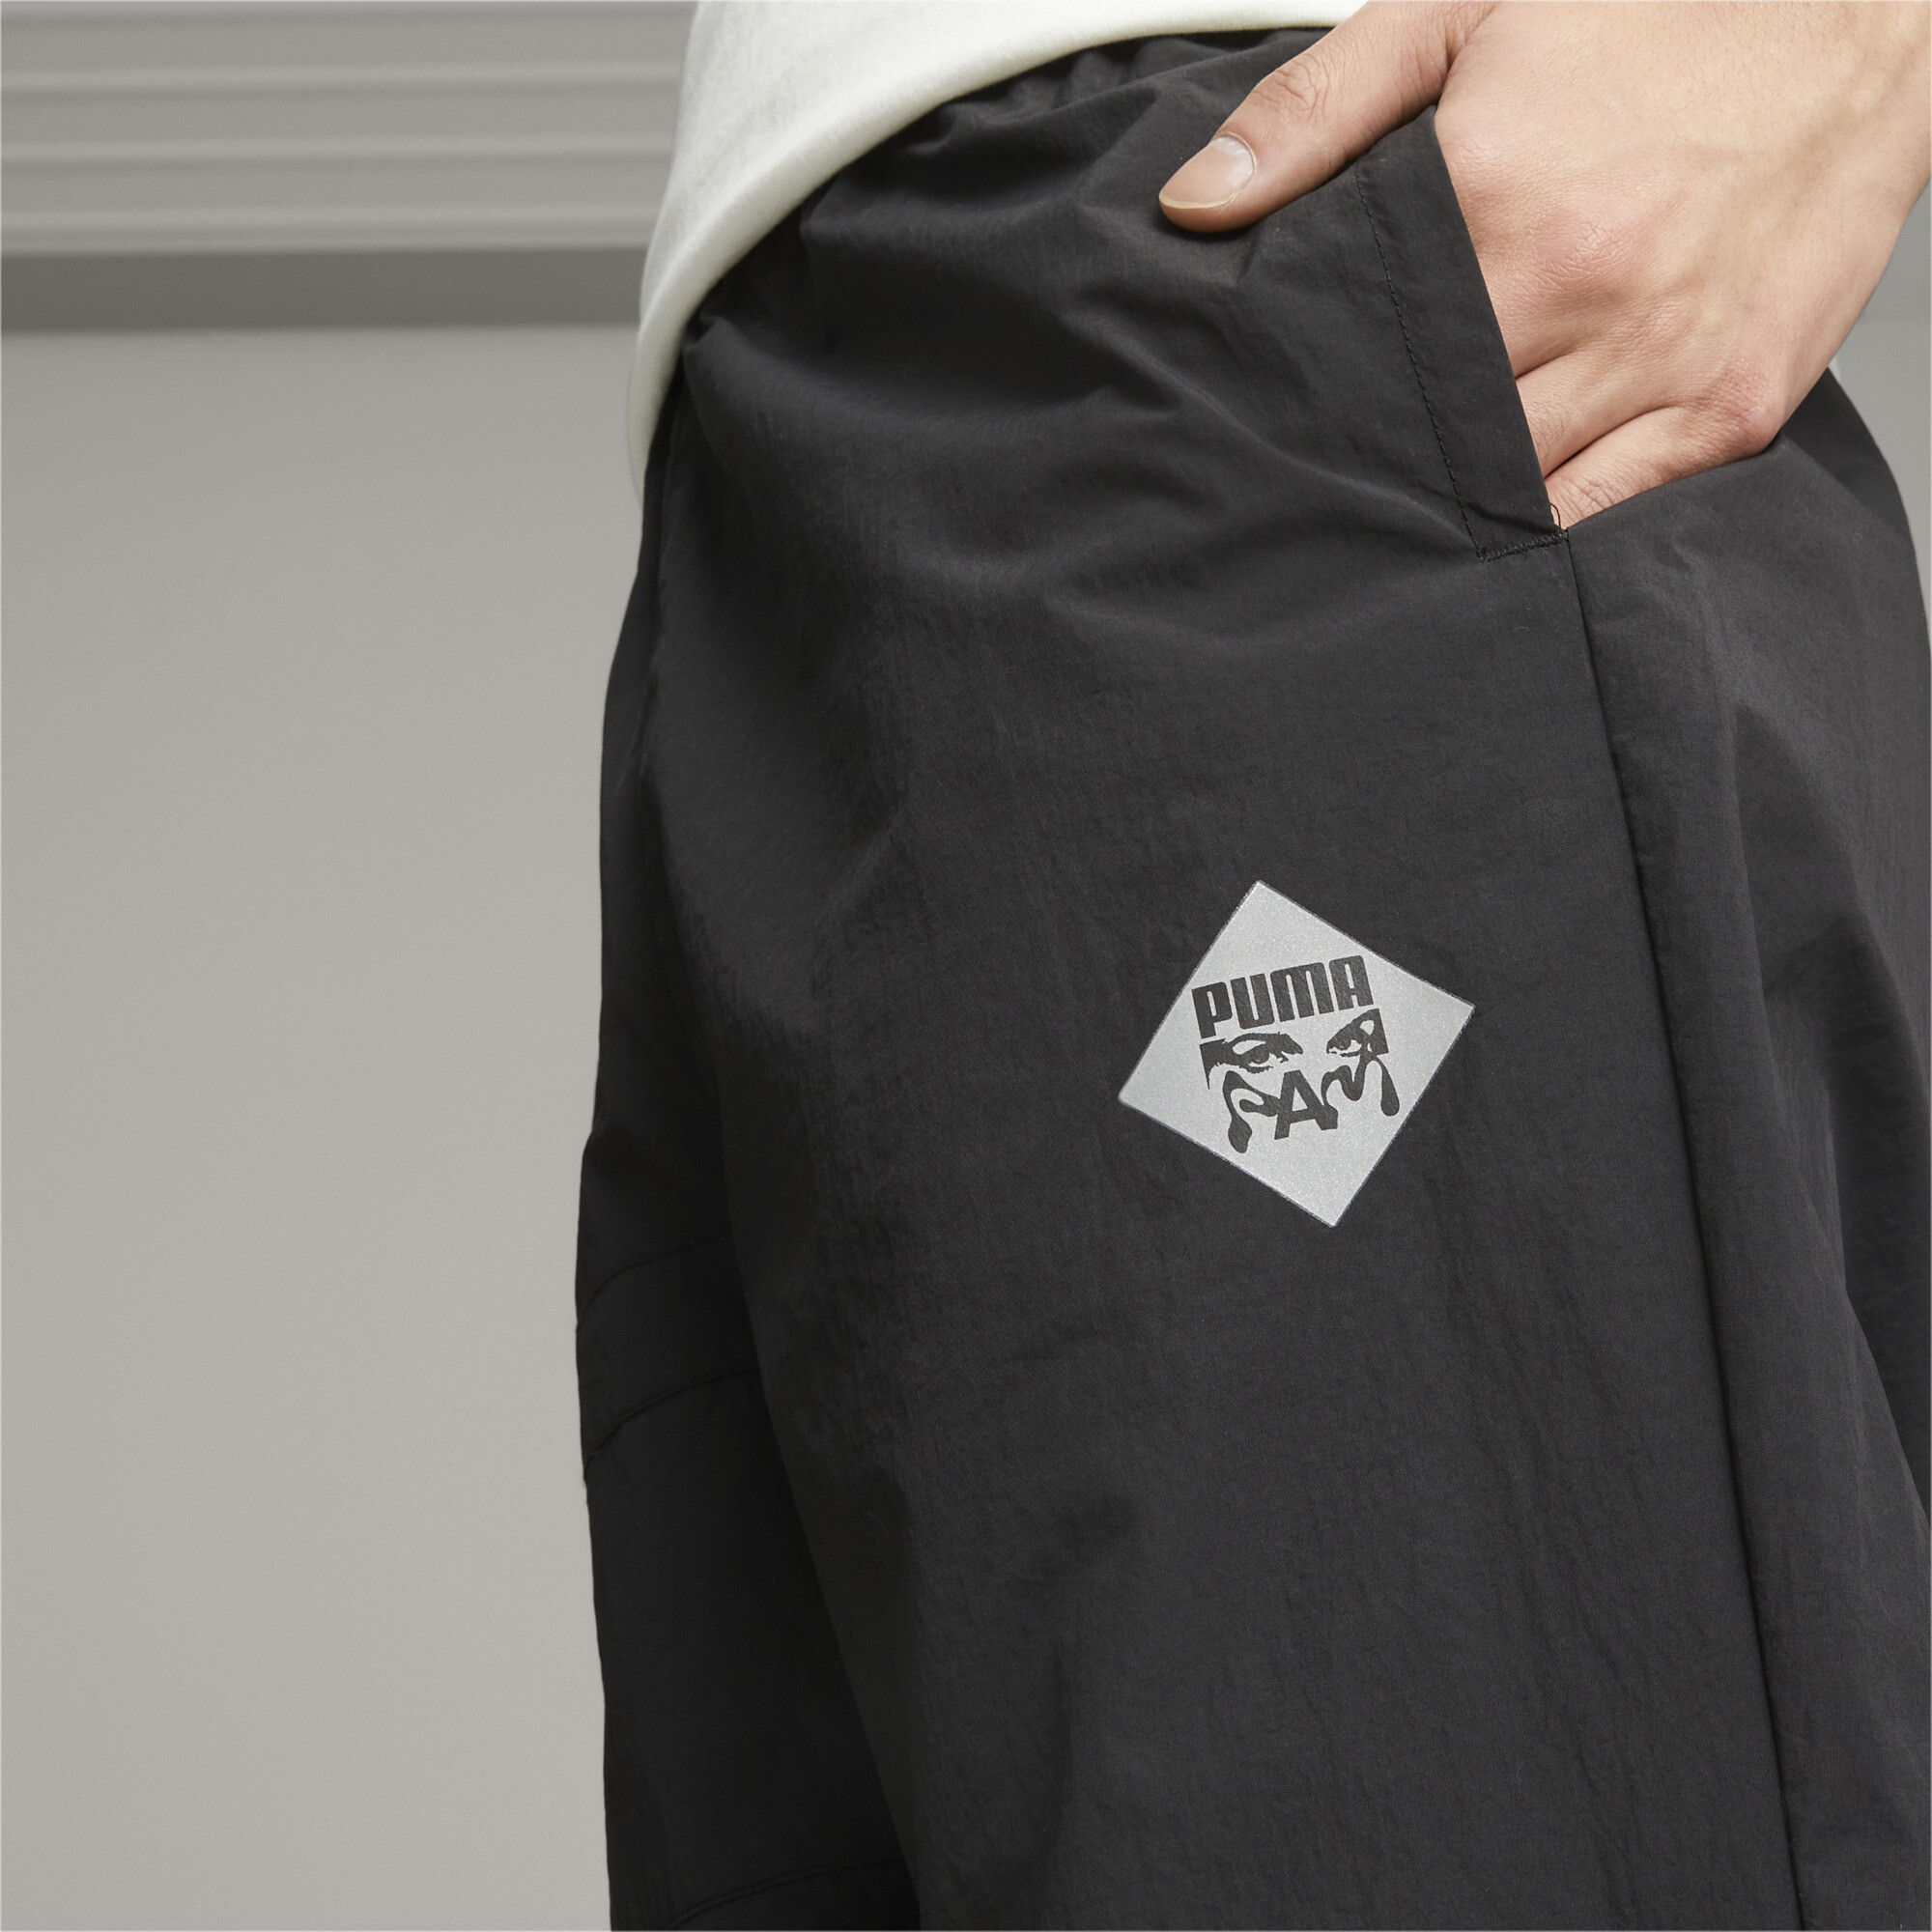 Men's PUMA X PERKS AND MINI Woven Pants In Black, Size 2XL